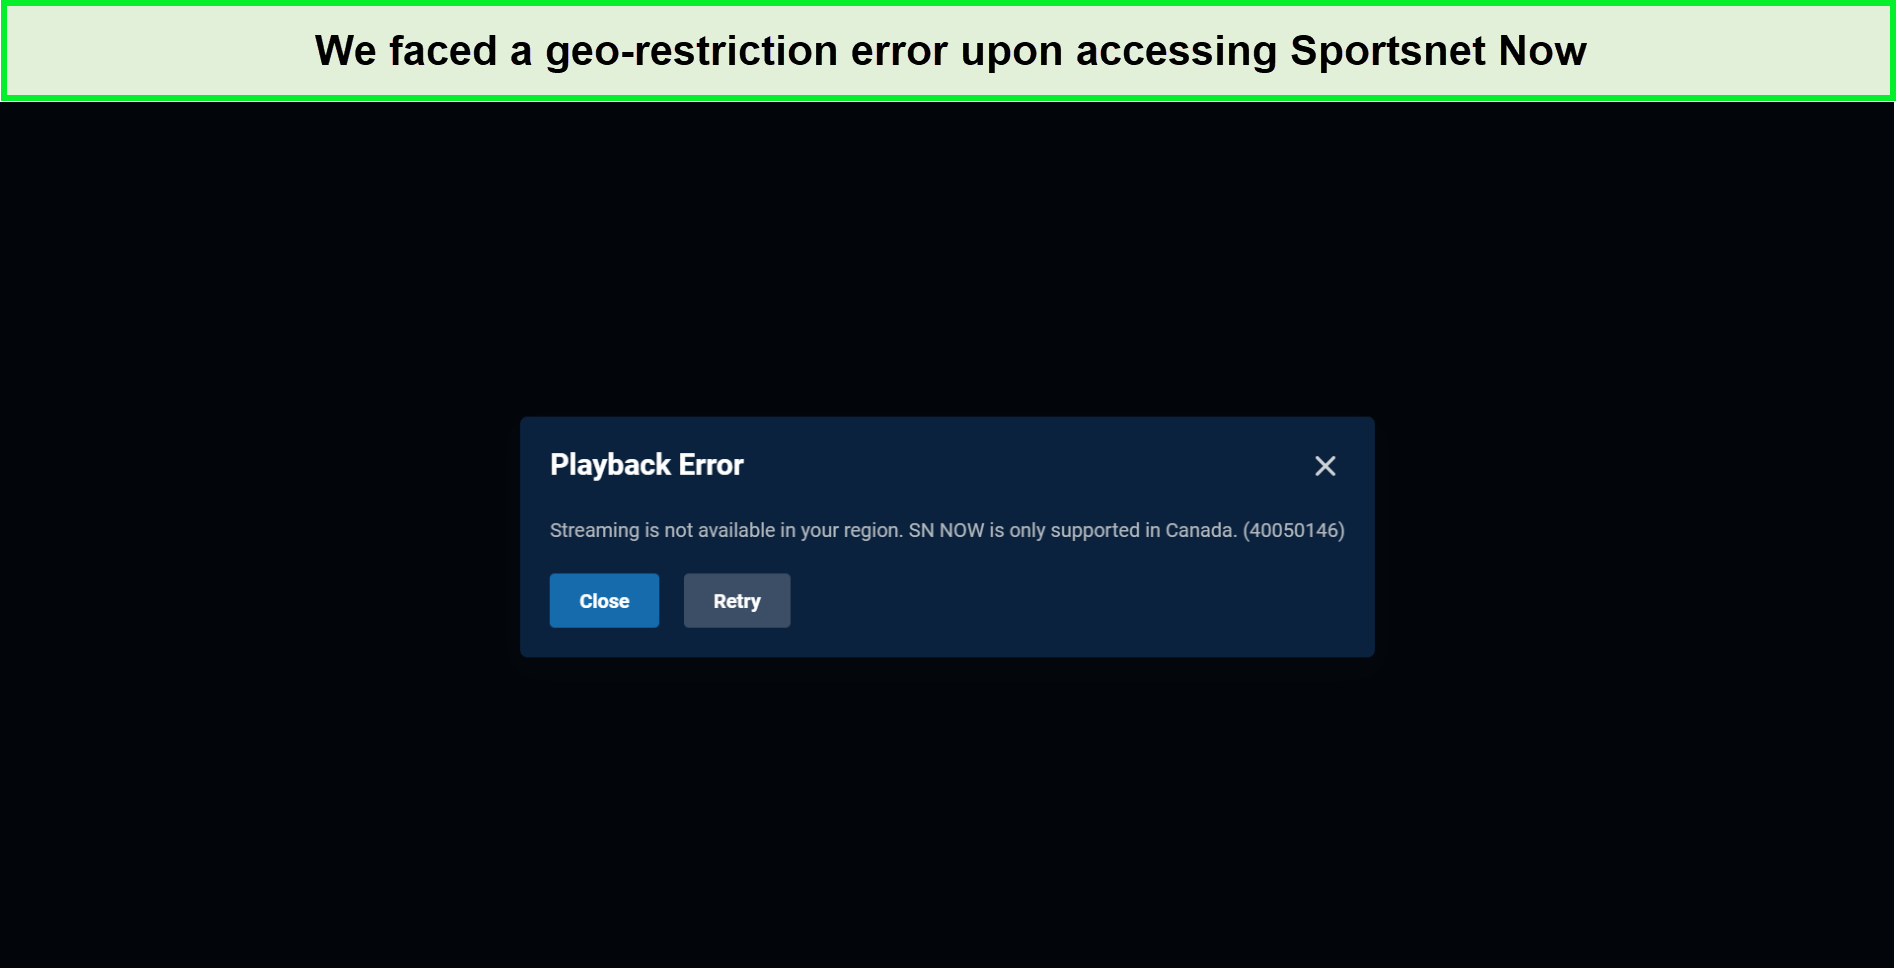 sportsnet-now-in-New Zealand-geo-restriction-error